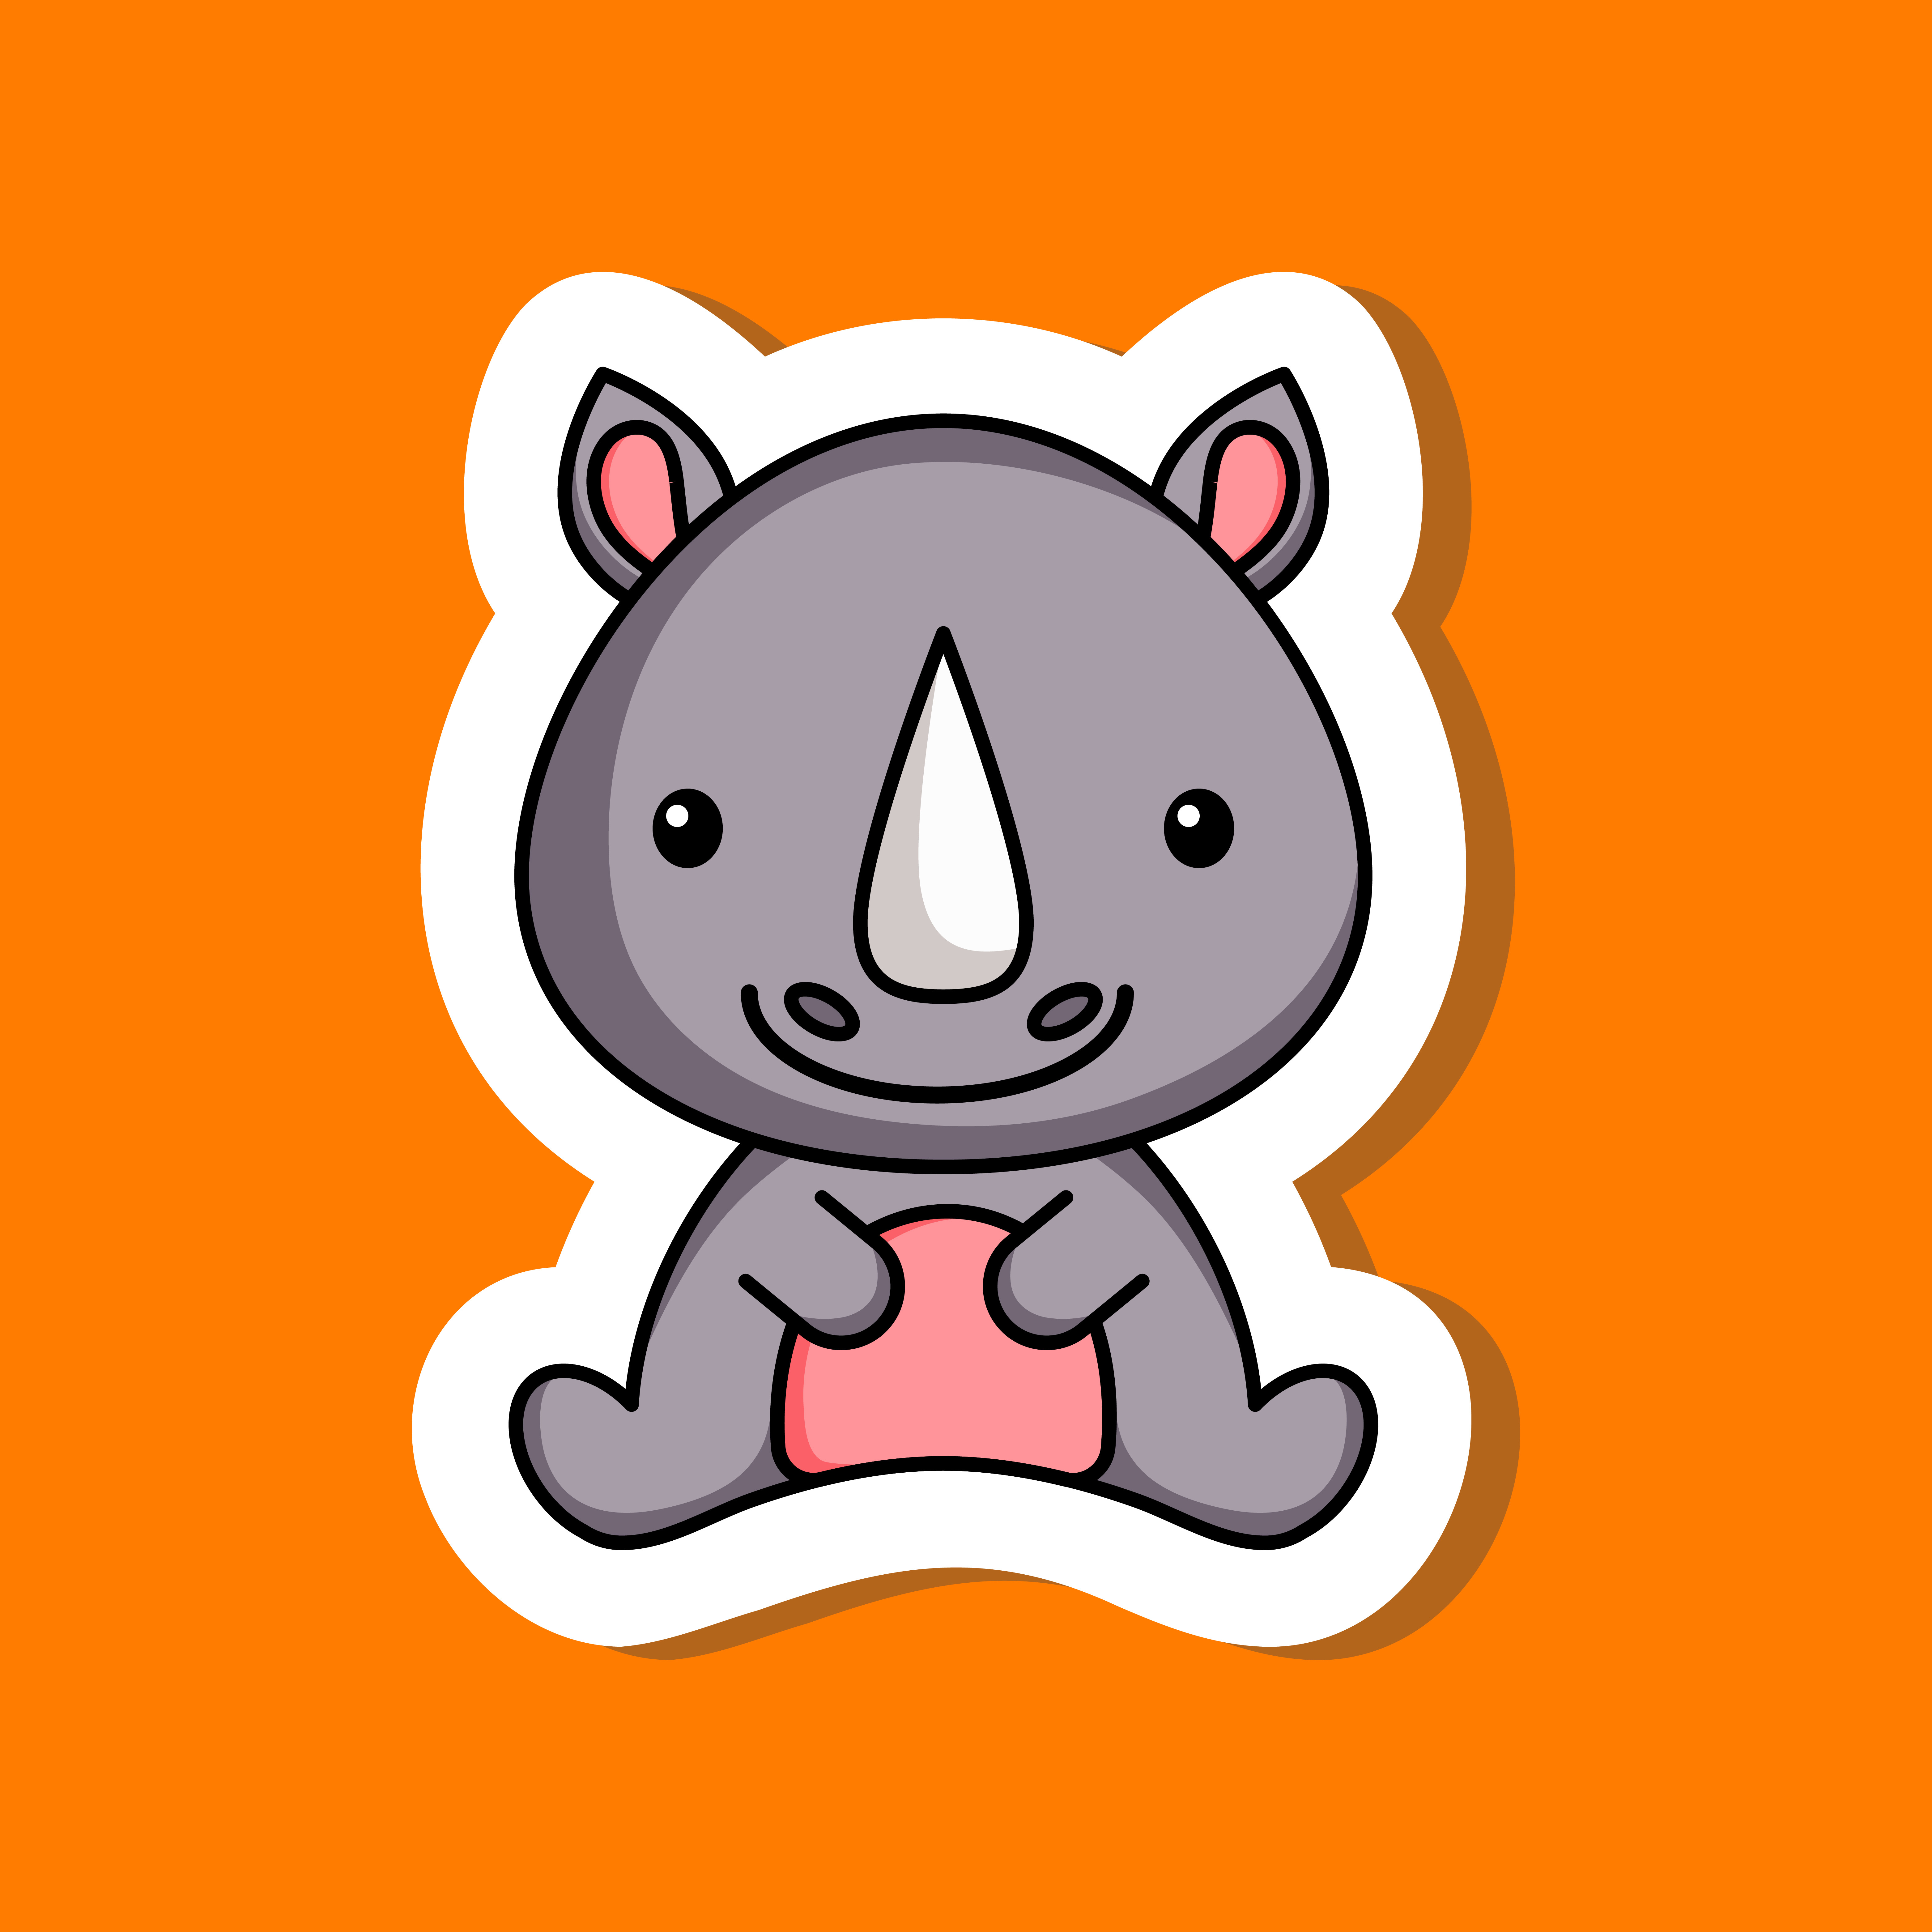 Cute cartoon sticker little rhino  logo template. Mascot animal character design of album, scrapbook, greeting card, invitation, flyer, sticker, card. Vector stock illustration.